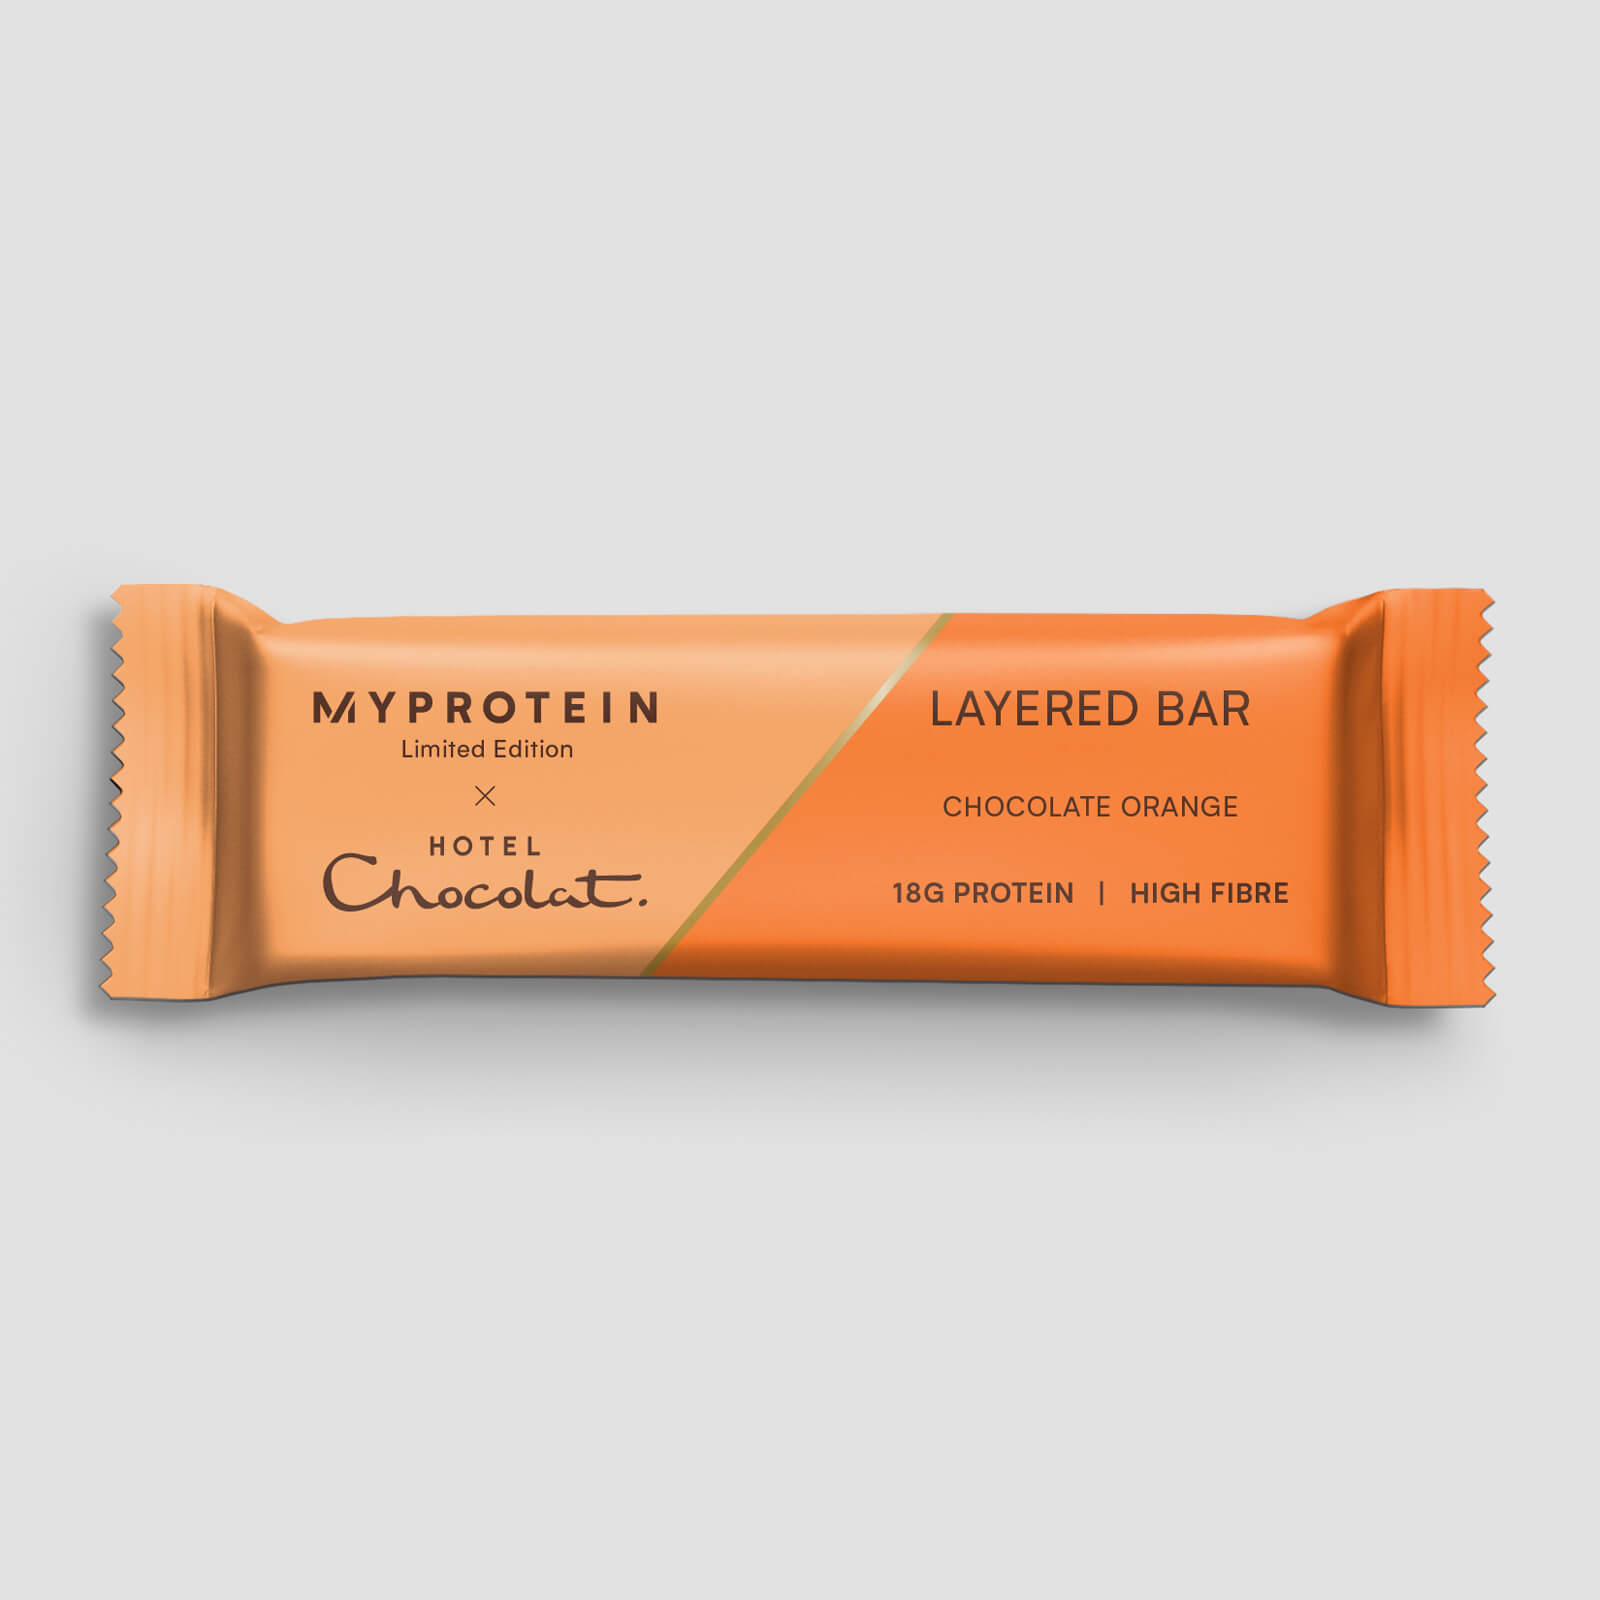 Myprotein X Hotel Chocolat Chocolate Orange Layered Bar Sample